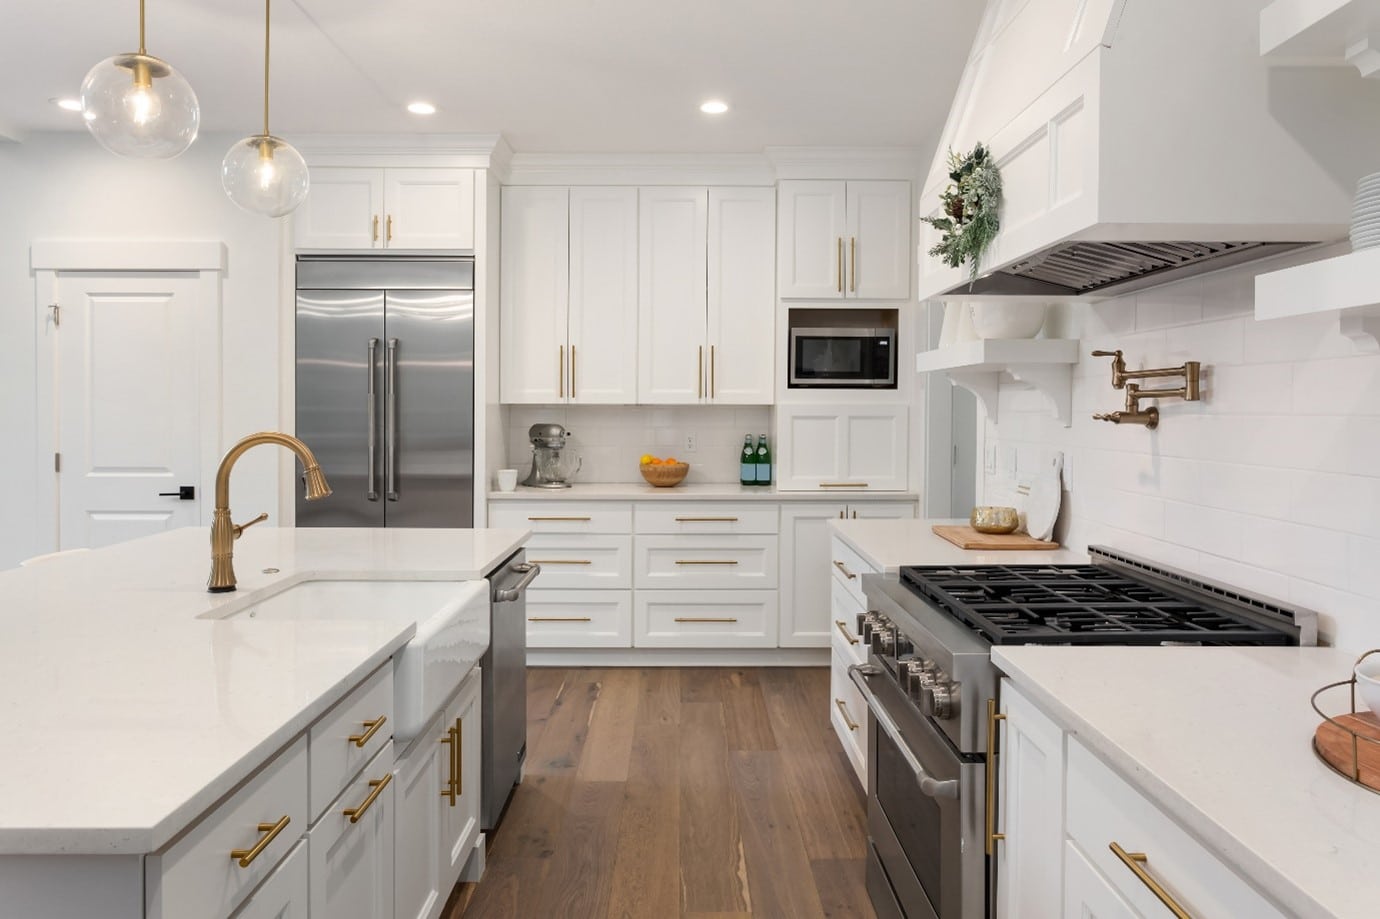 Cost saving kitchen renovation ideas